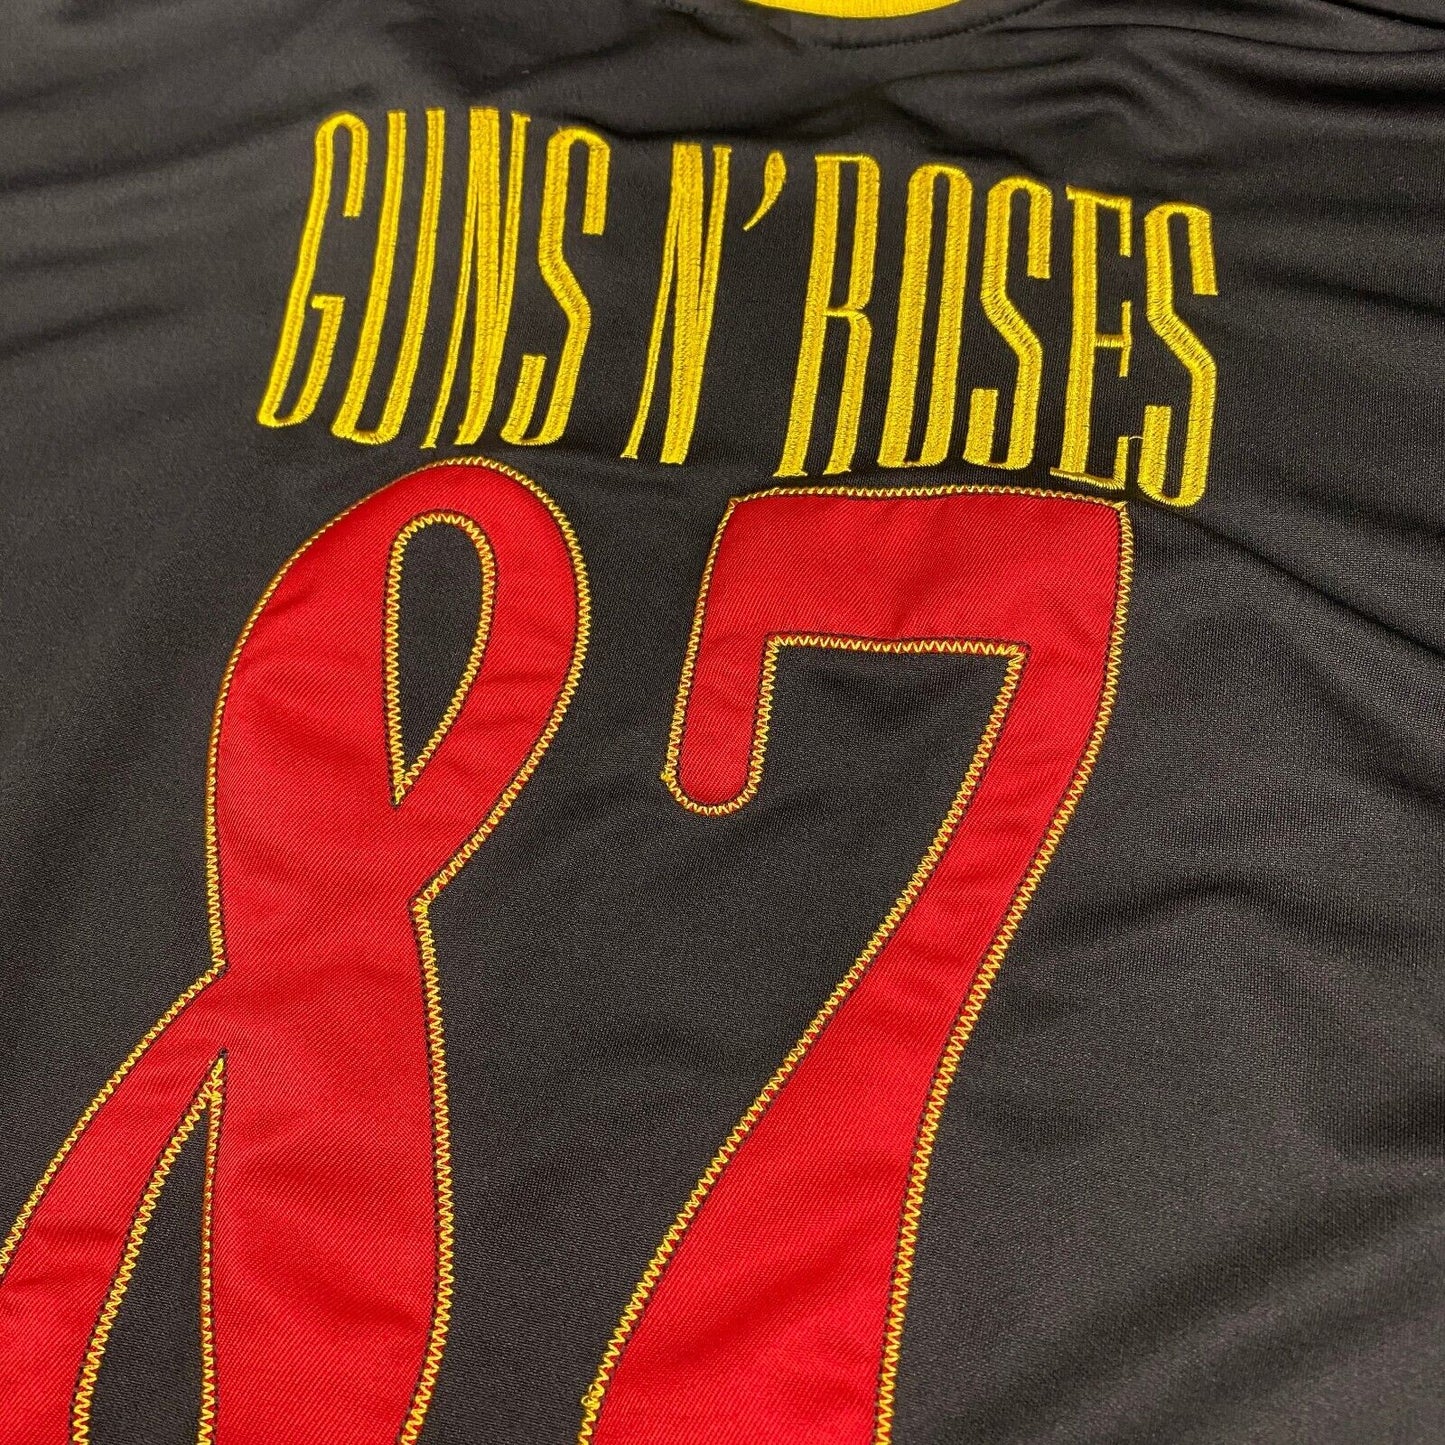 VINTAGE Guns N Roses Band Hockey Jersey Shirt sz Large Men Adult